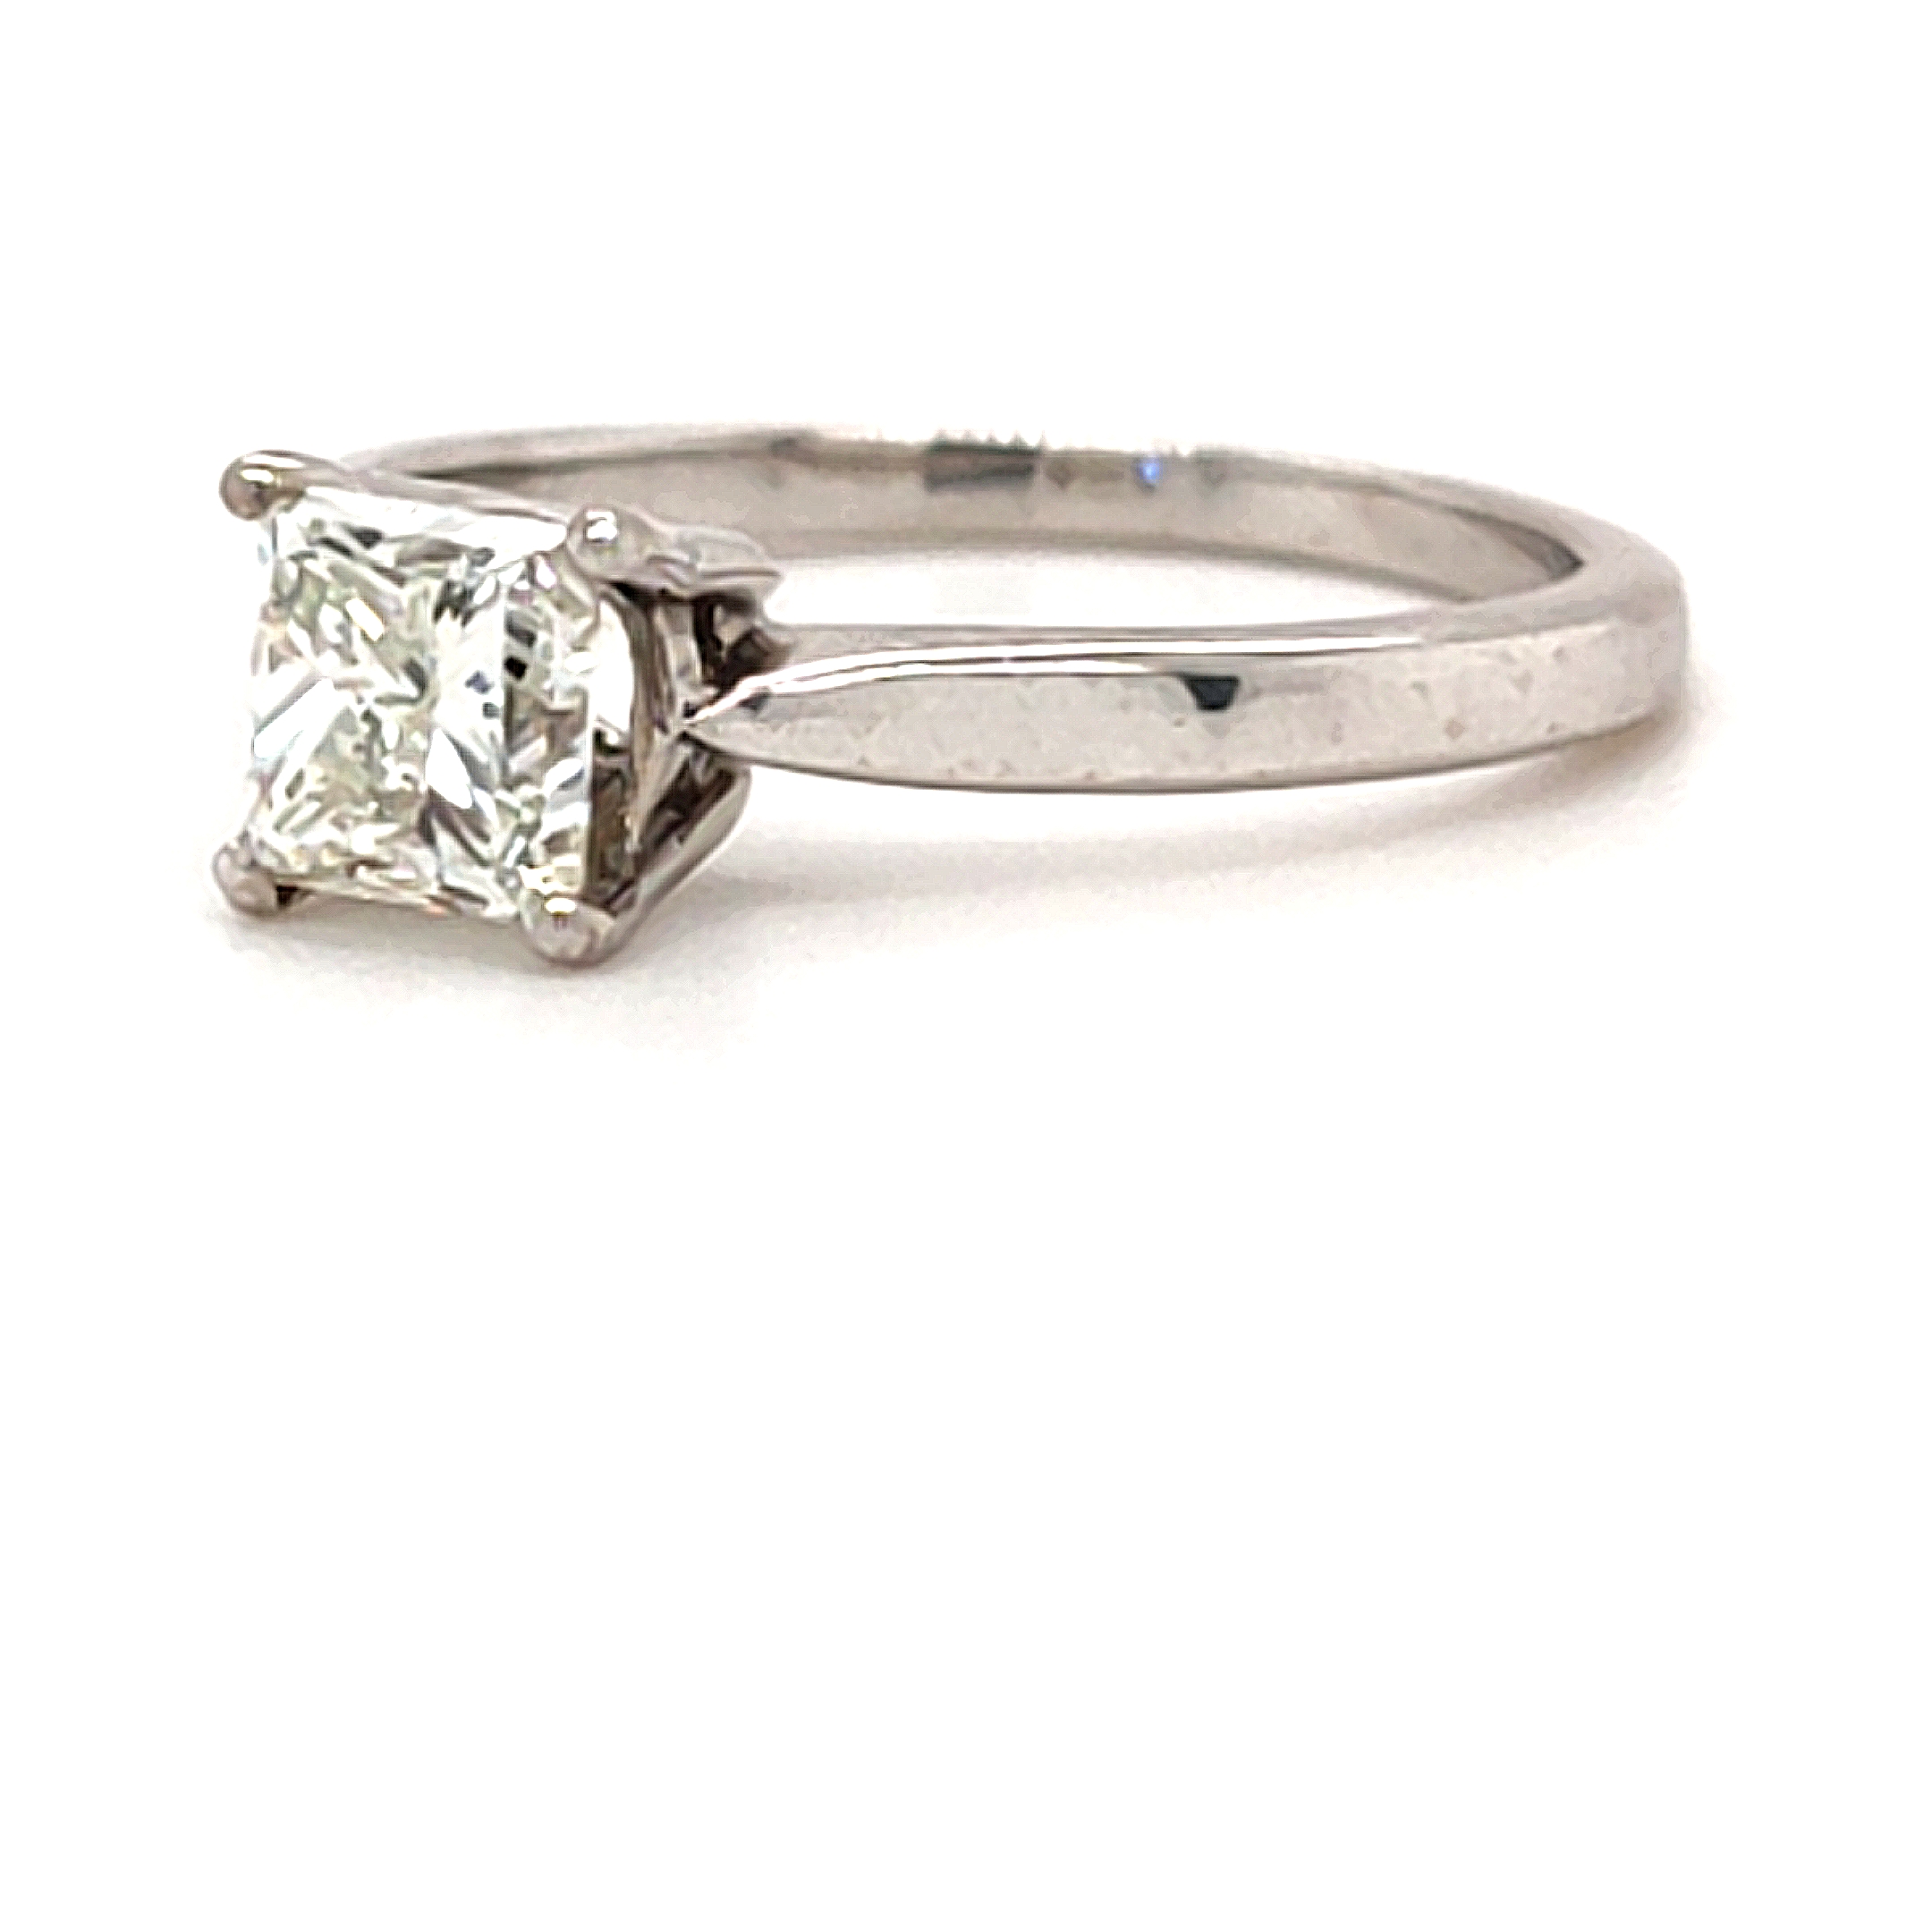 1.00ct, 18ct White Gold Princess Cut Diamond Ring